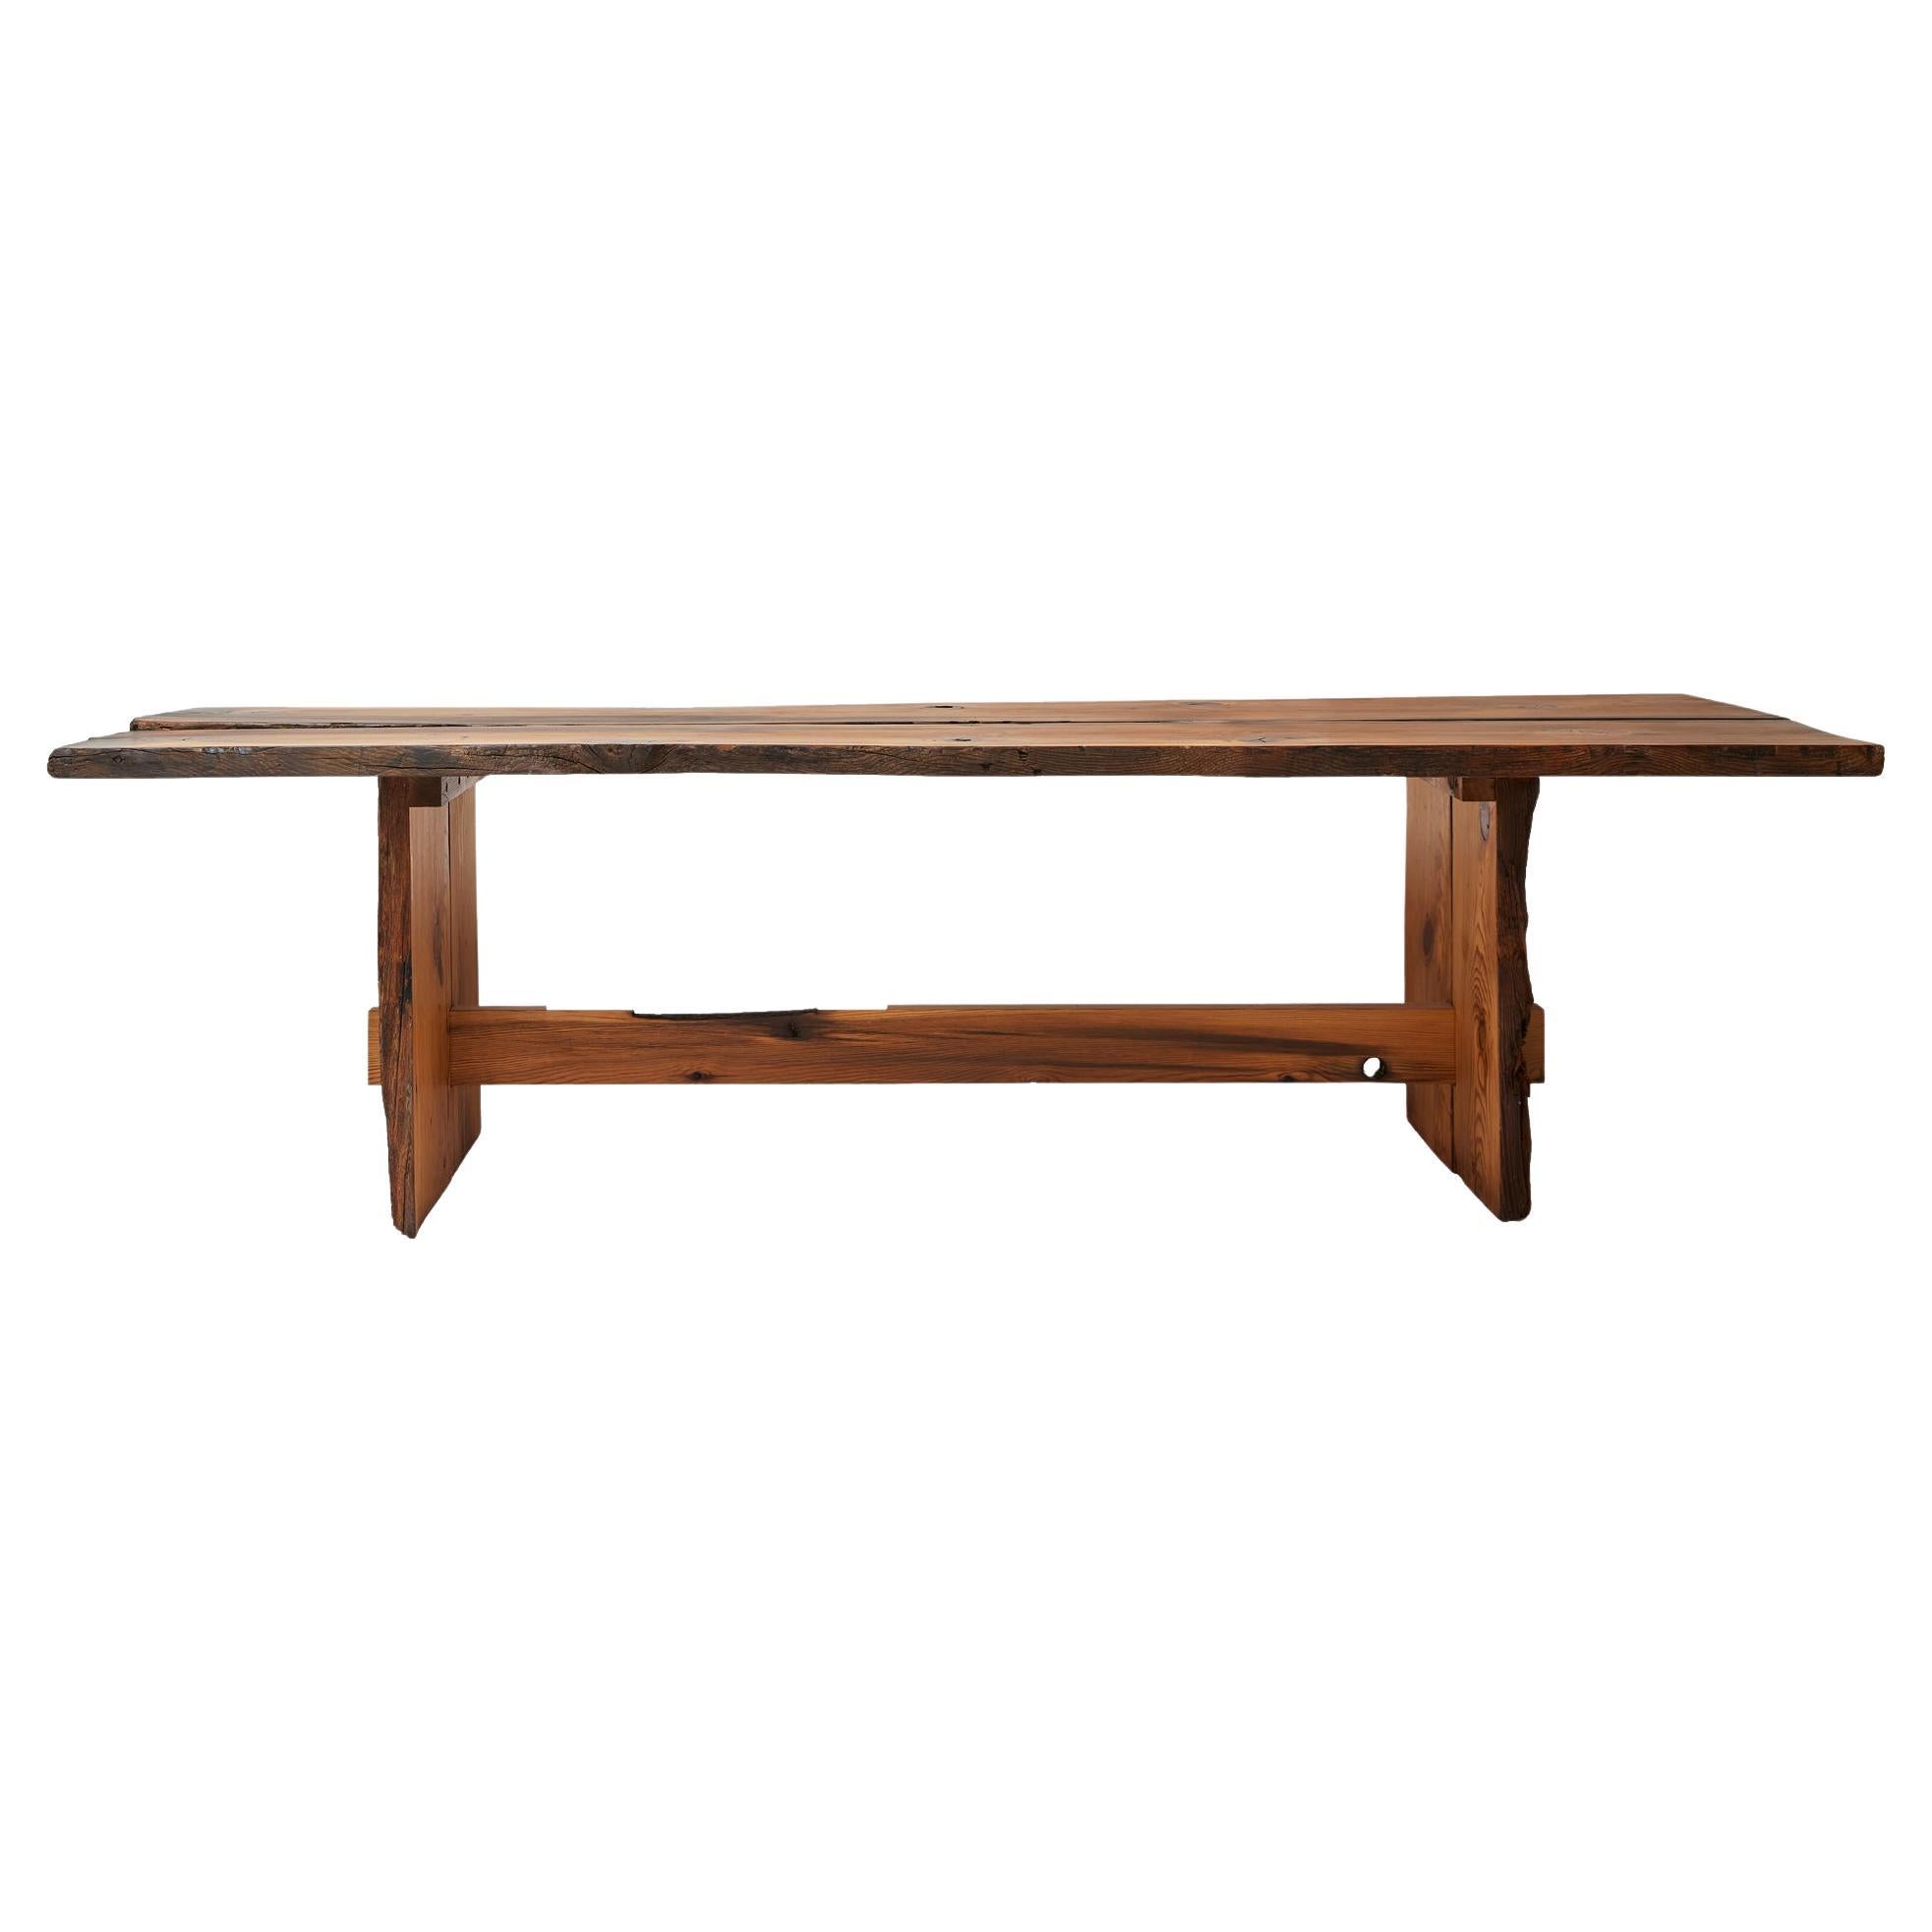 Plank Table in historical wood by Danish Fine Cabinetmaker Malte Gormsen 